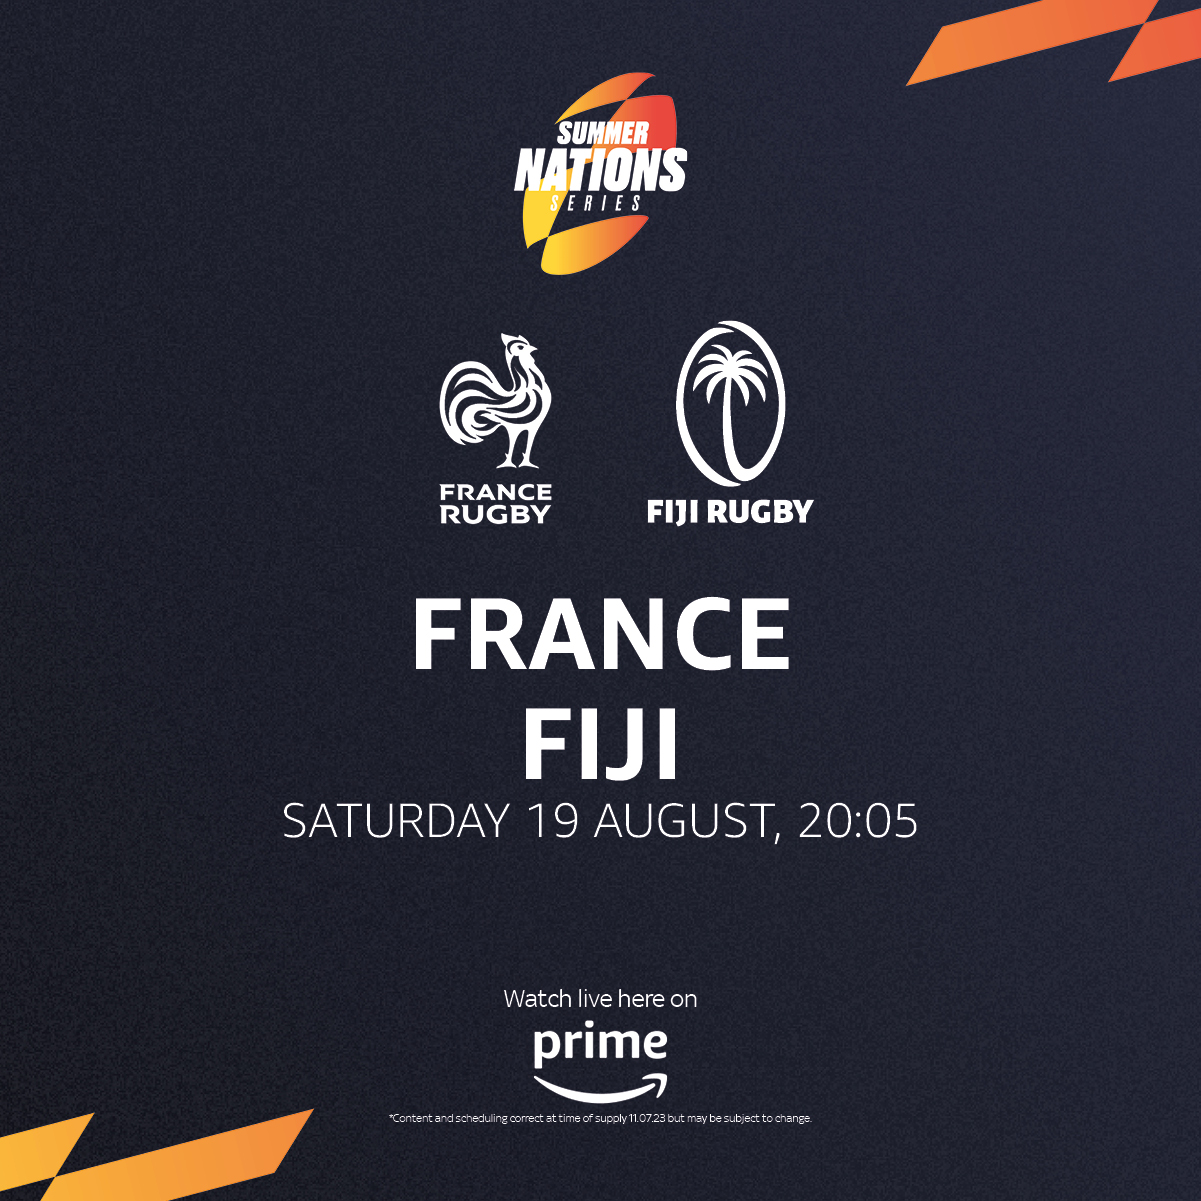 France vs Fiji Watch live at the pub